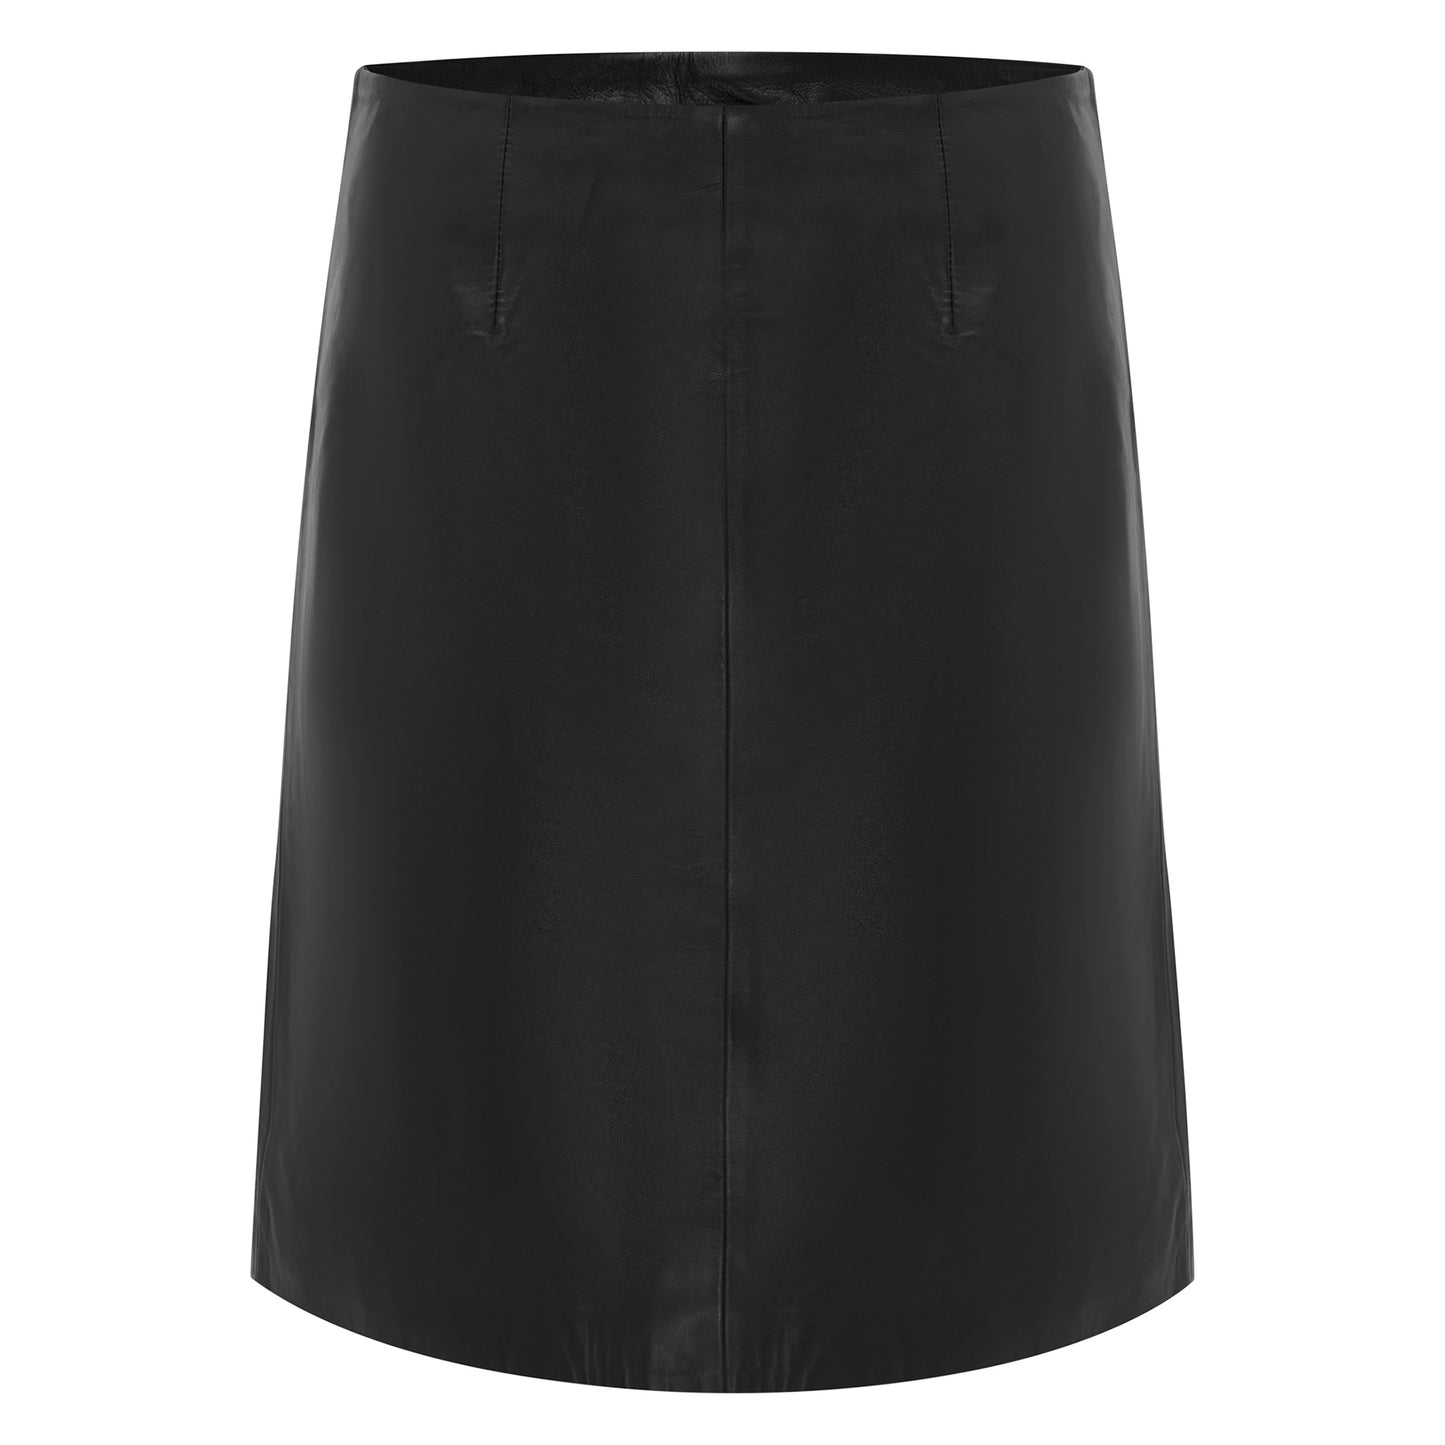 La Jupe Noir En Cuir - Black Leather Skirt